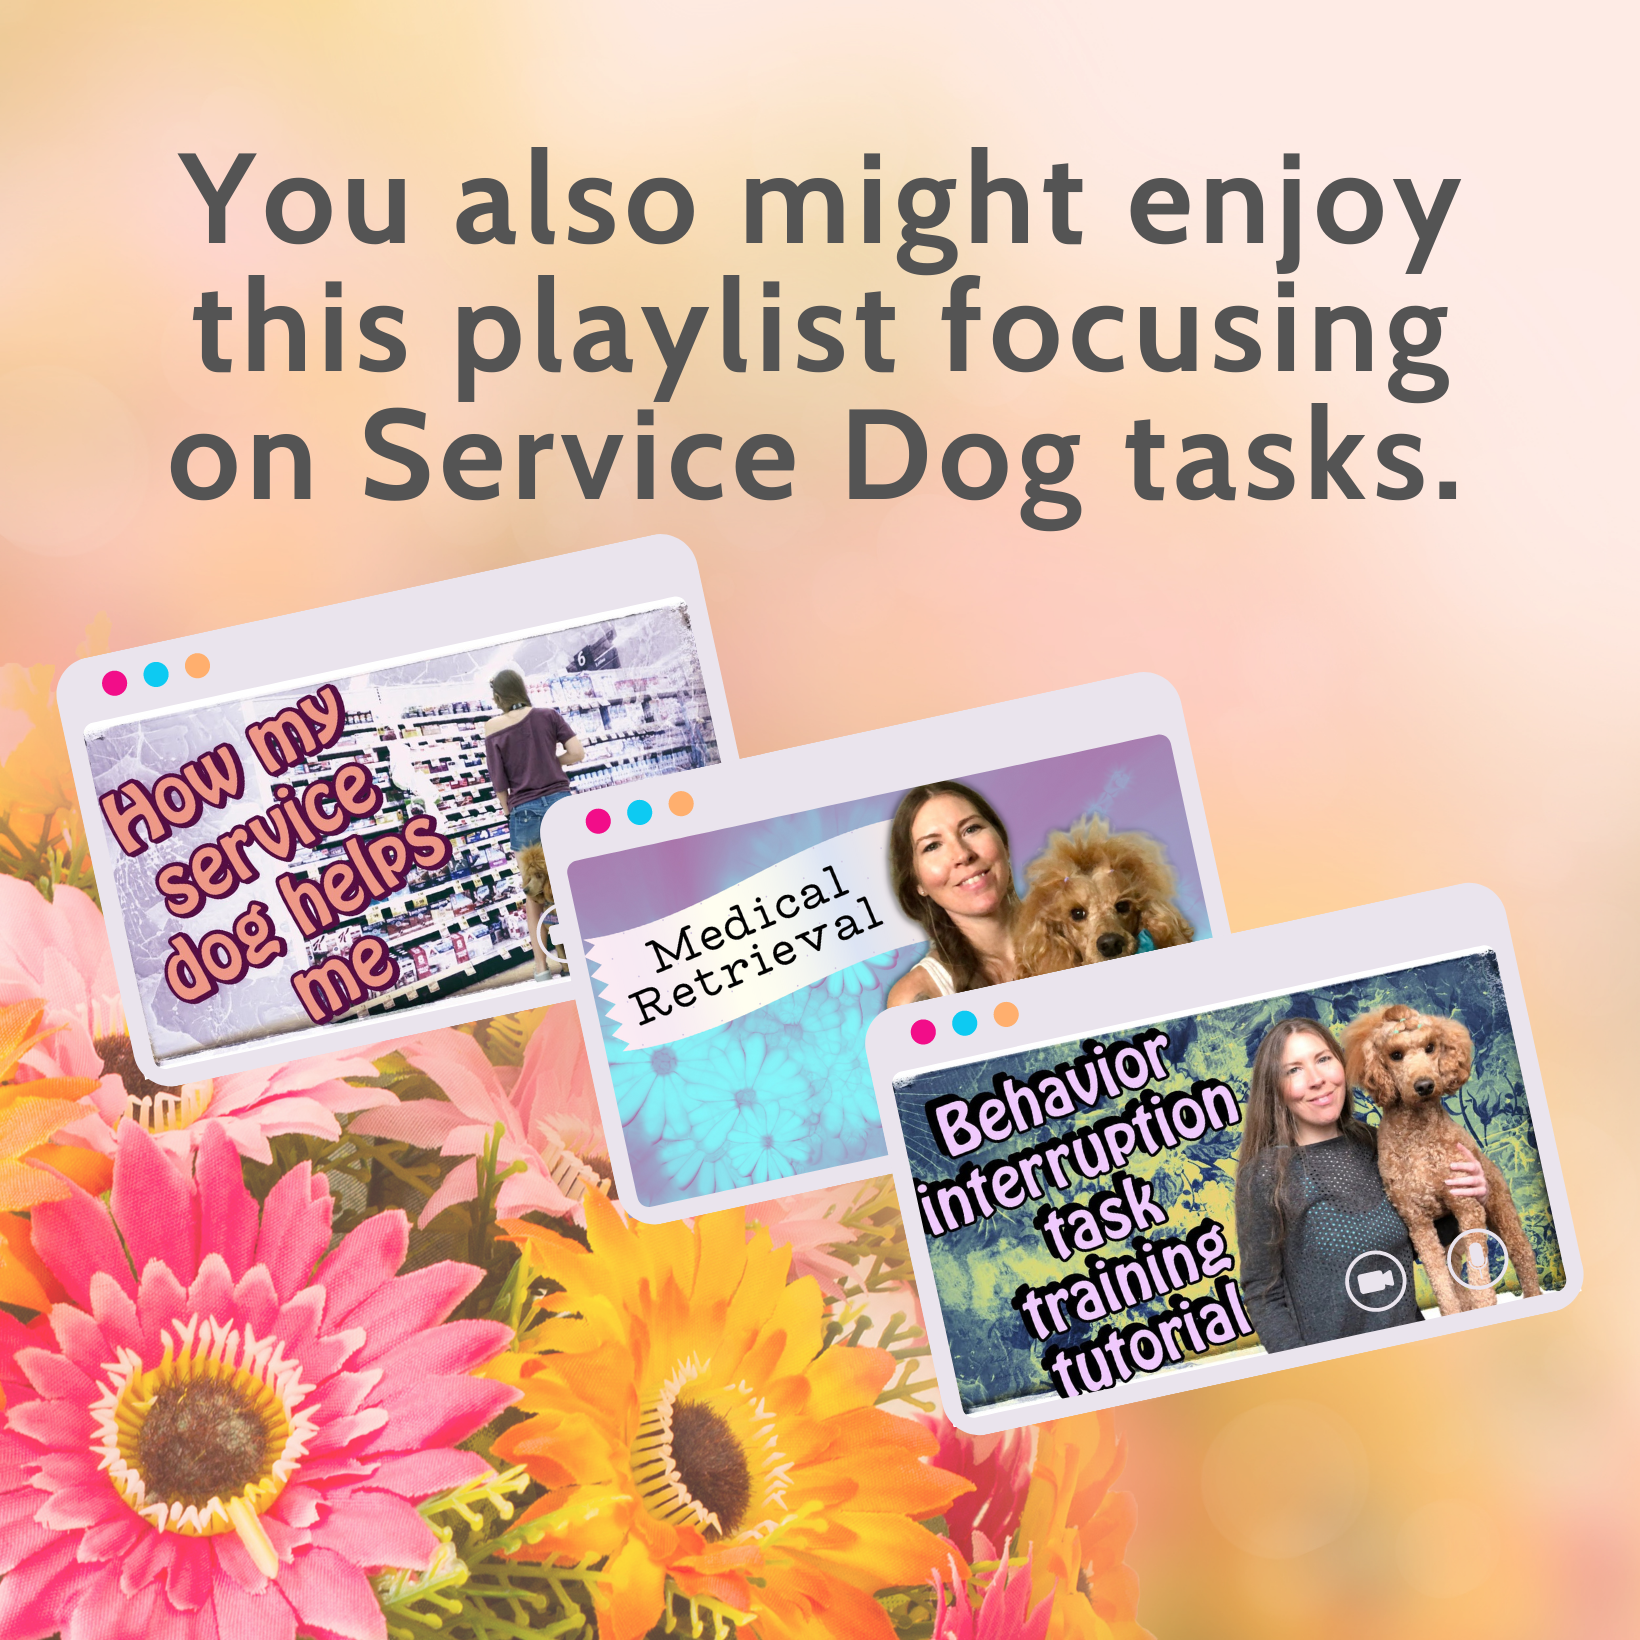 Service dog task videos